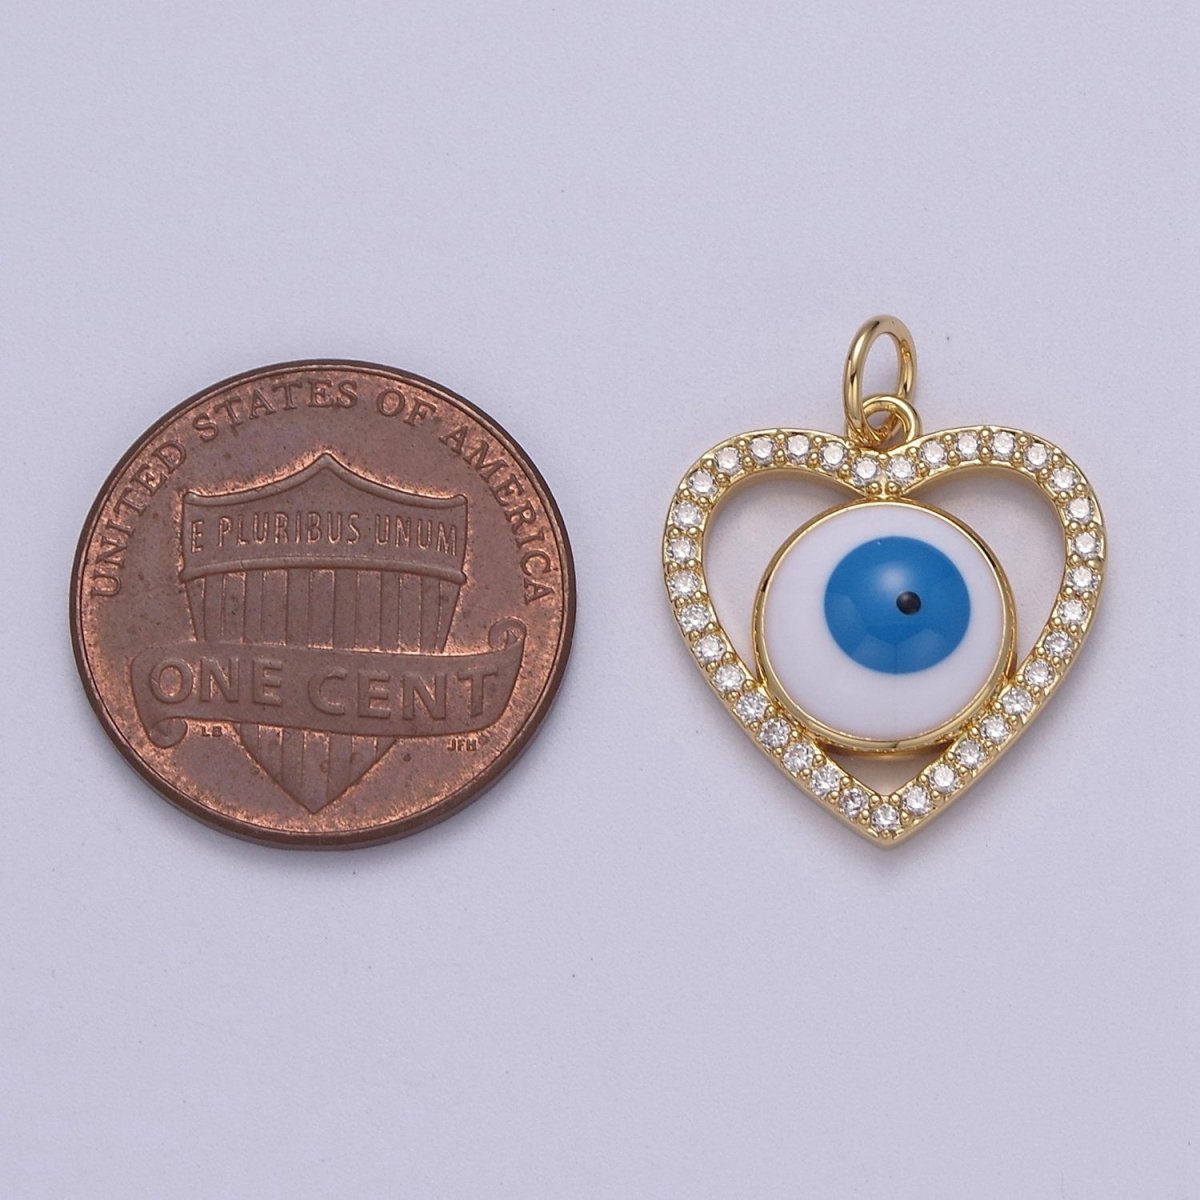 Enamel Heart Evil Eye Pendant Micro Pave Heart 14k Gold Filled Charm Necklace-DIY Jewelry Making W-189 - DLUXCA